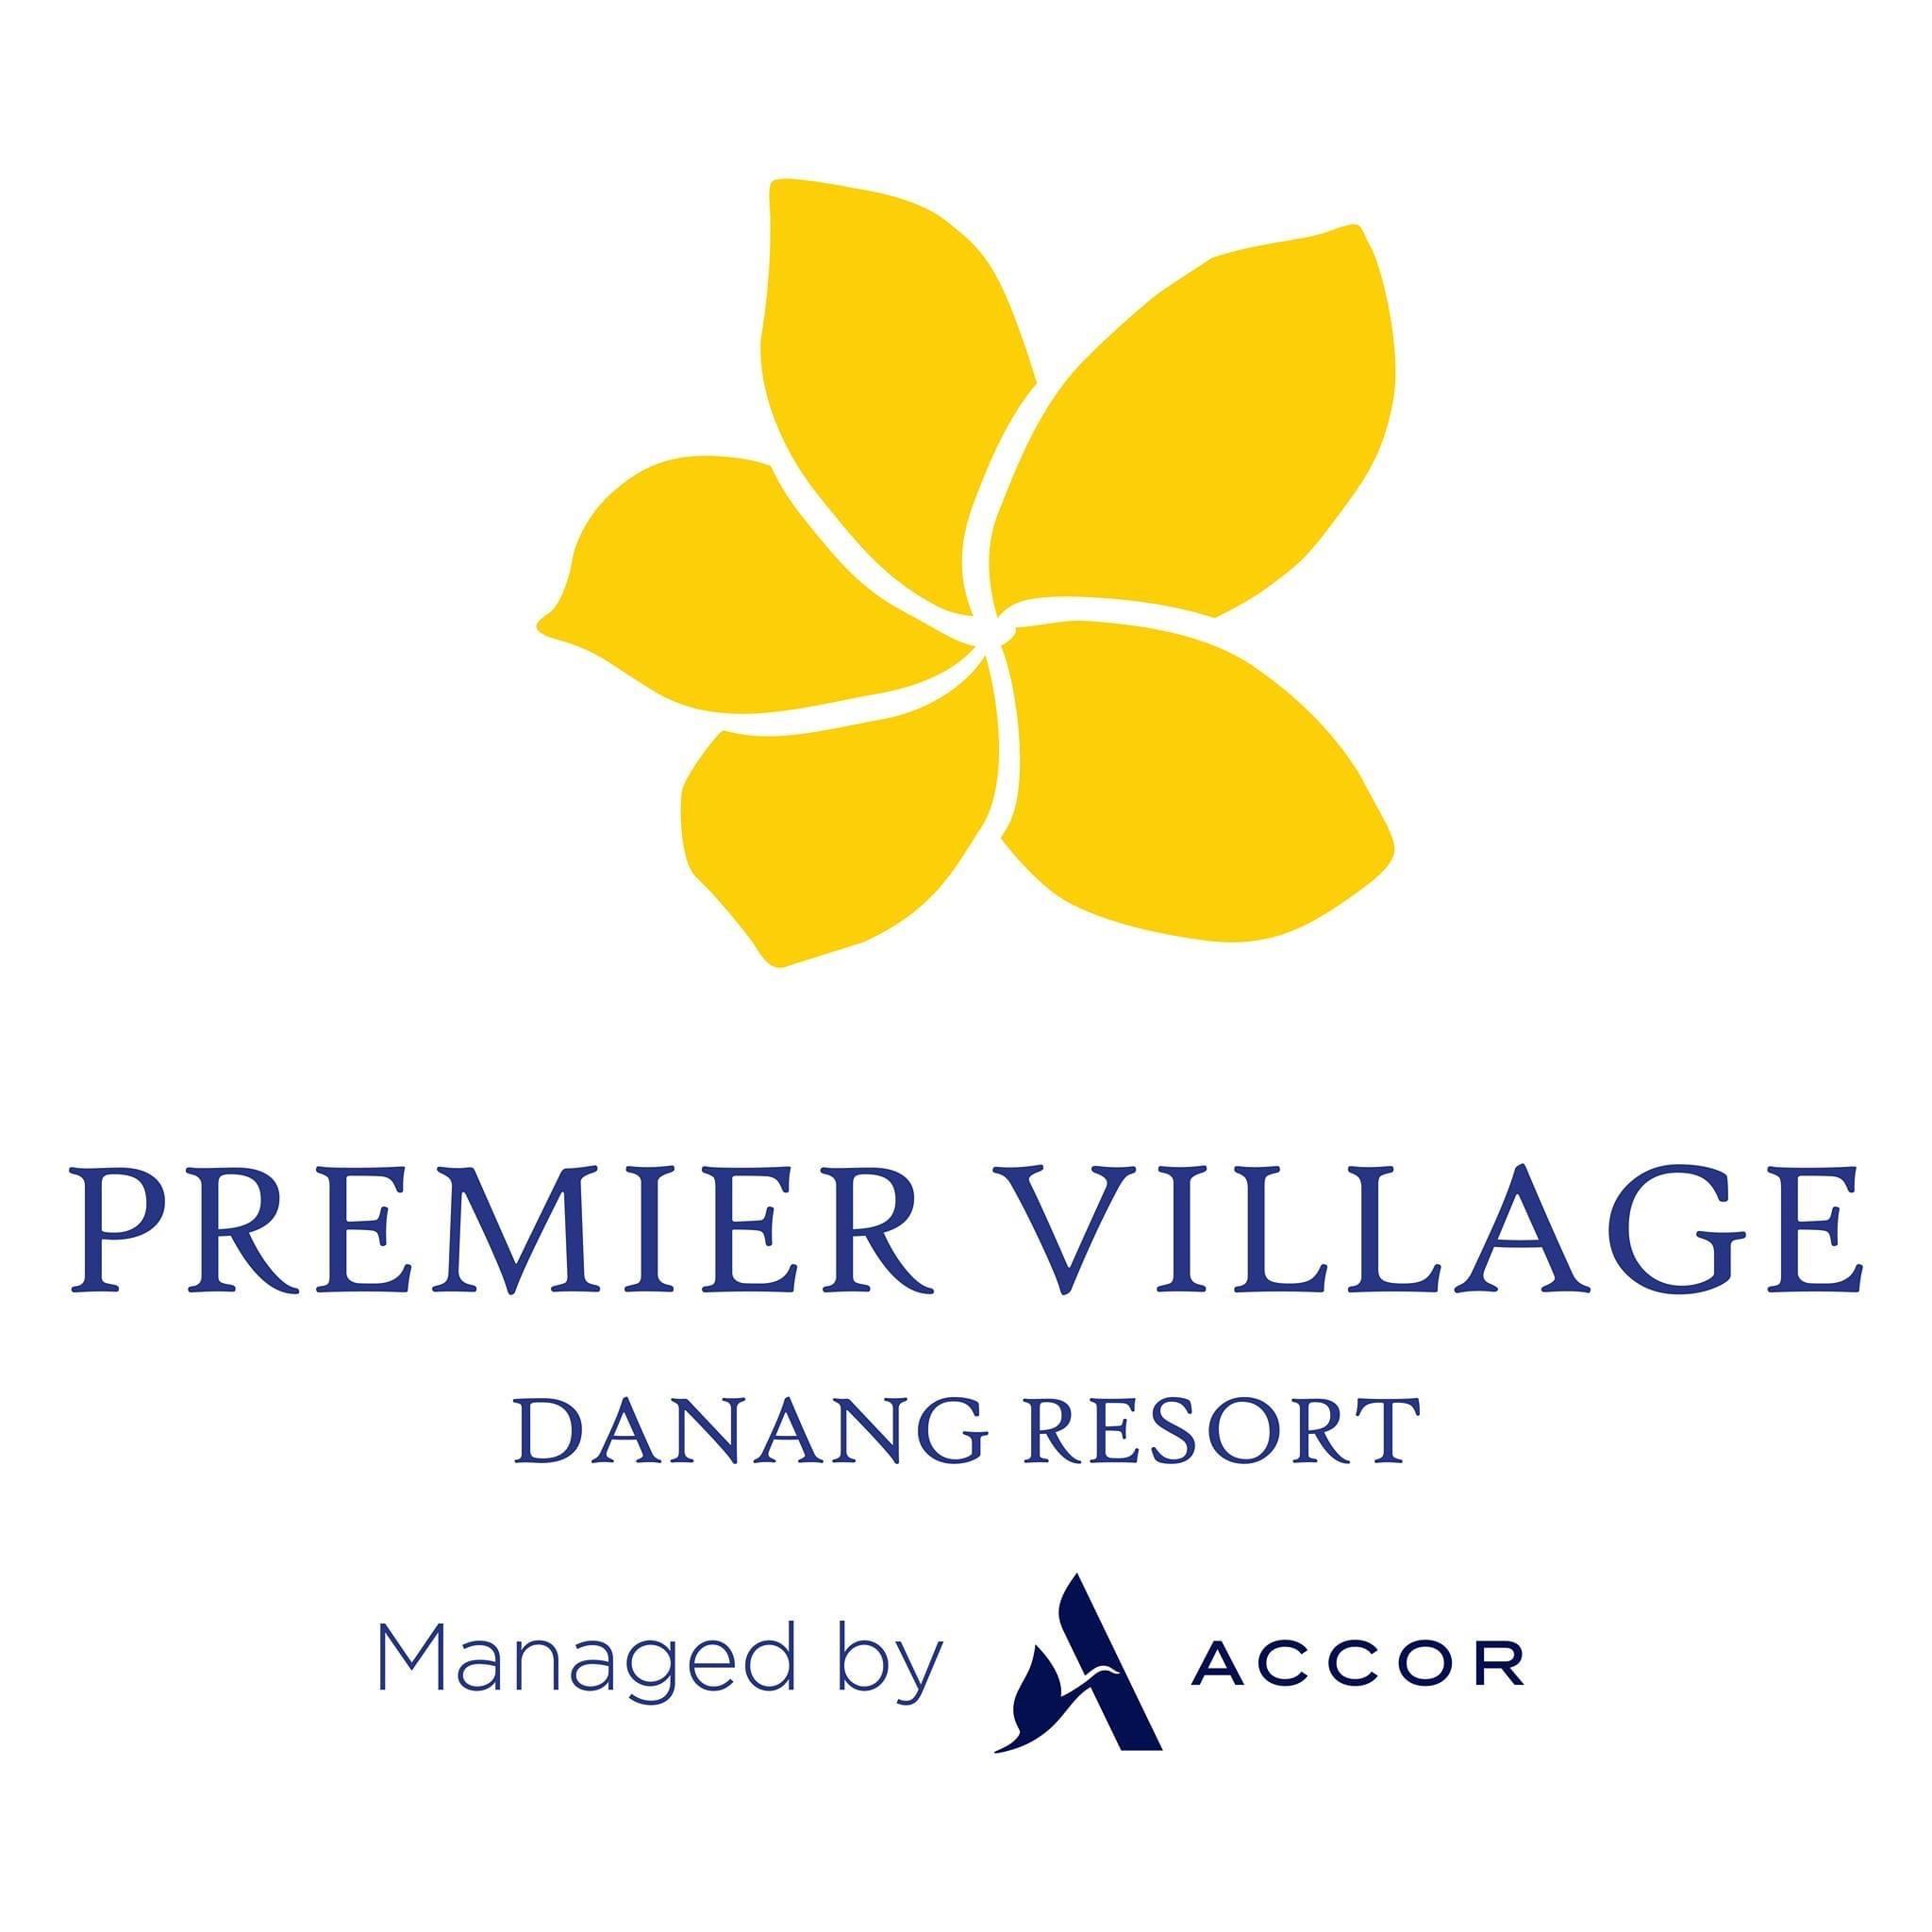 Premier Village Da Nang Resort - Managed By AccorHotels